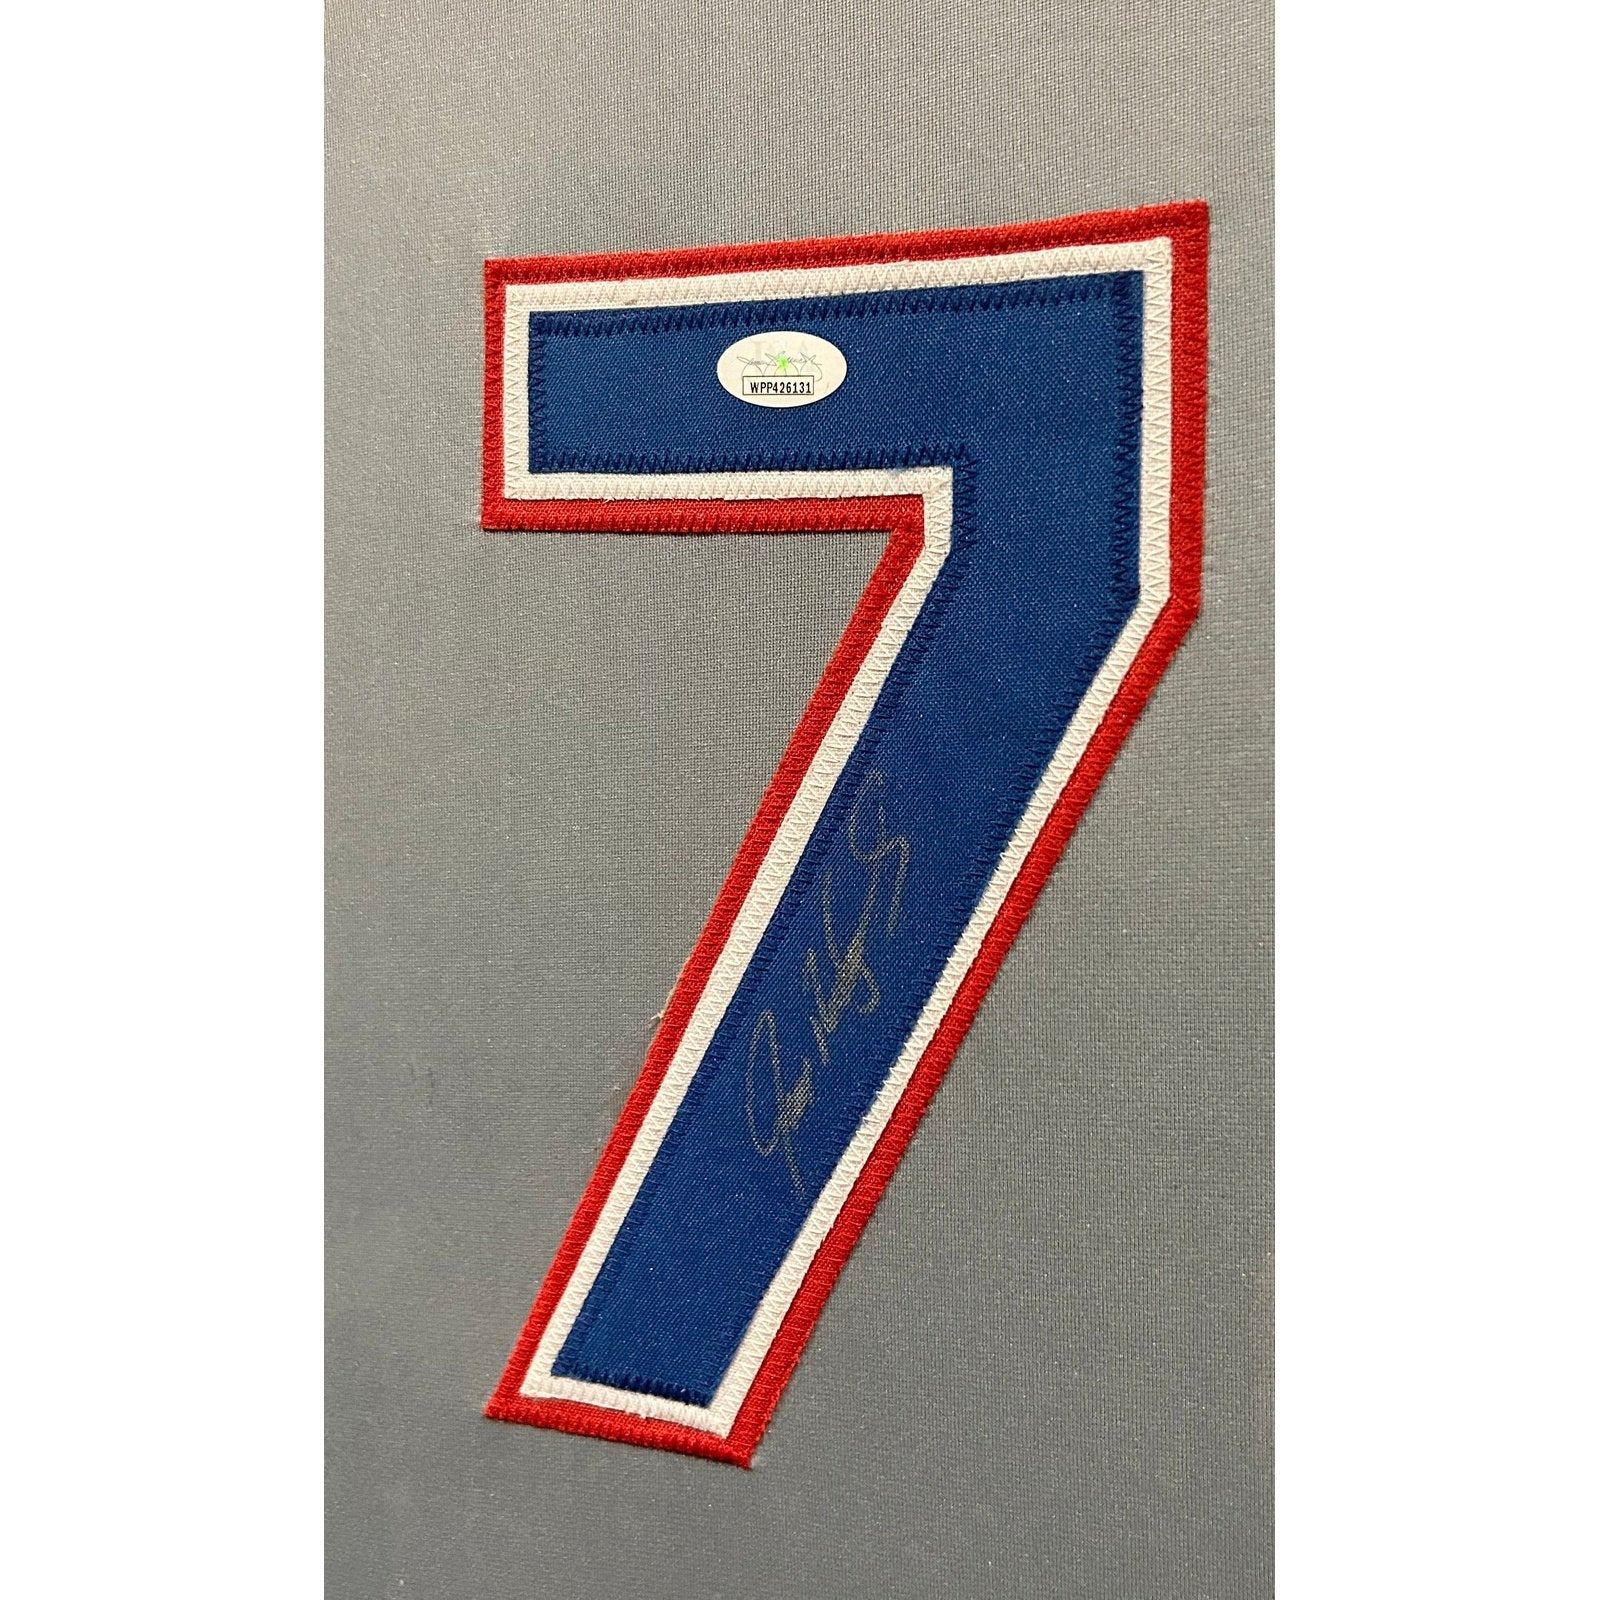 Ivan Rodriguez Signed Framed Jersey JSA Autographed Texas Rangers Pudge